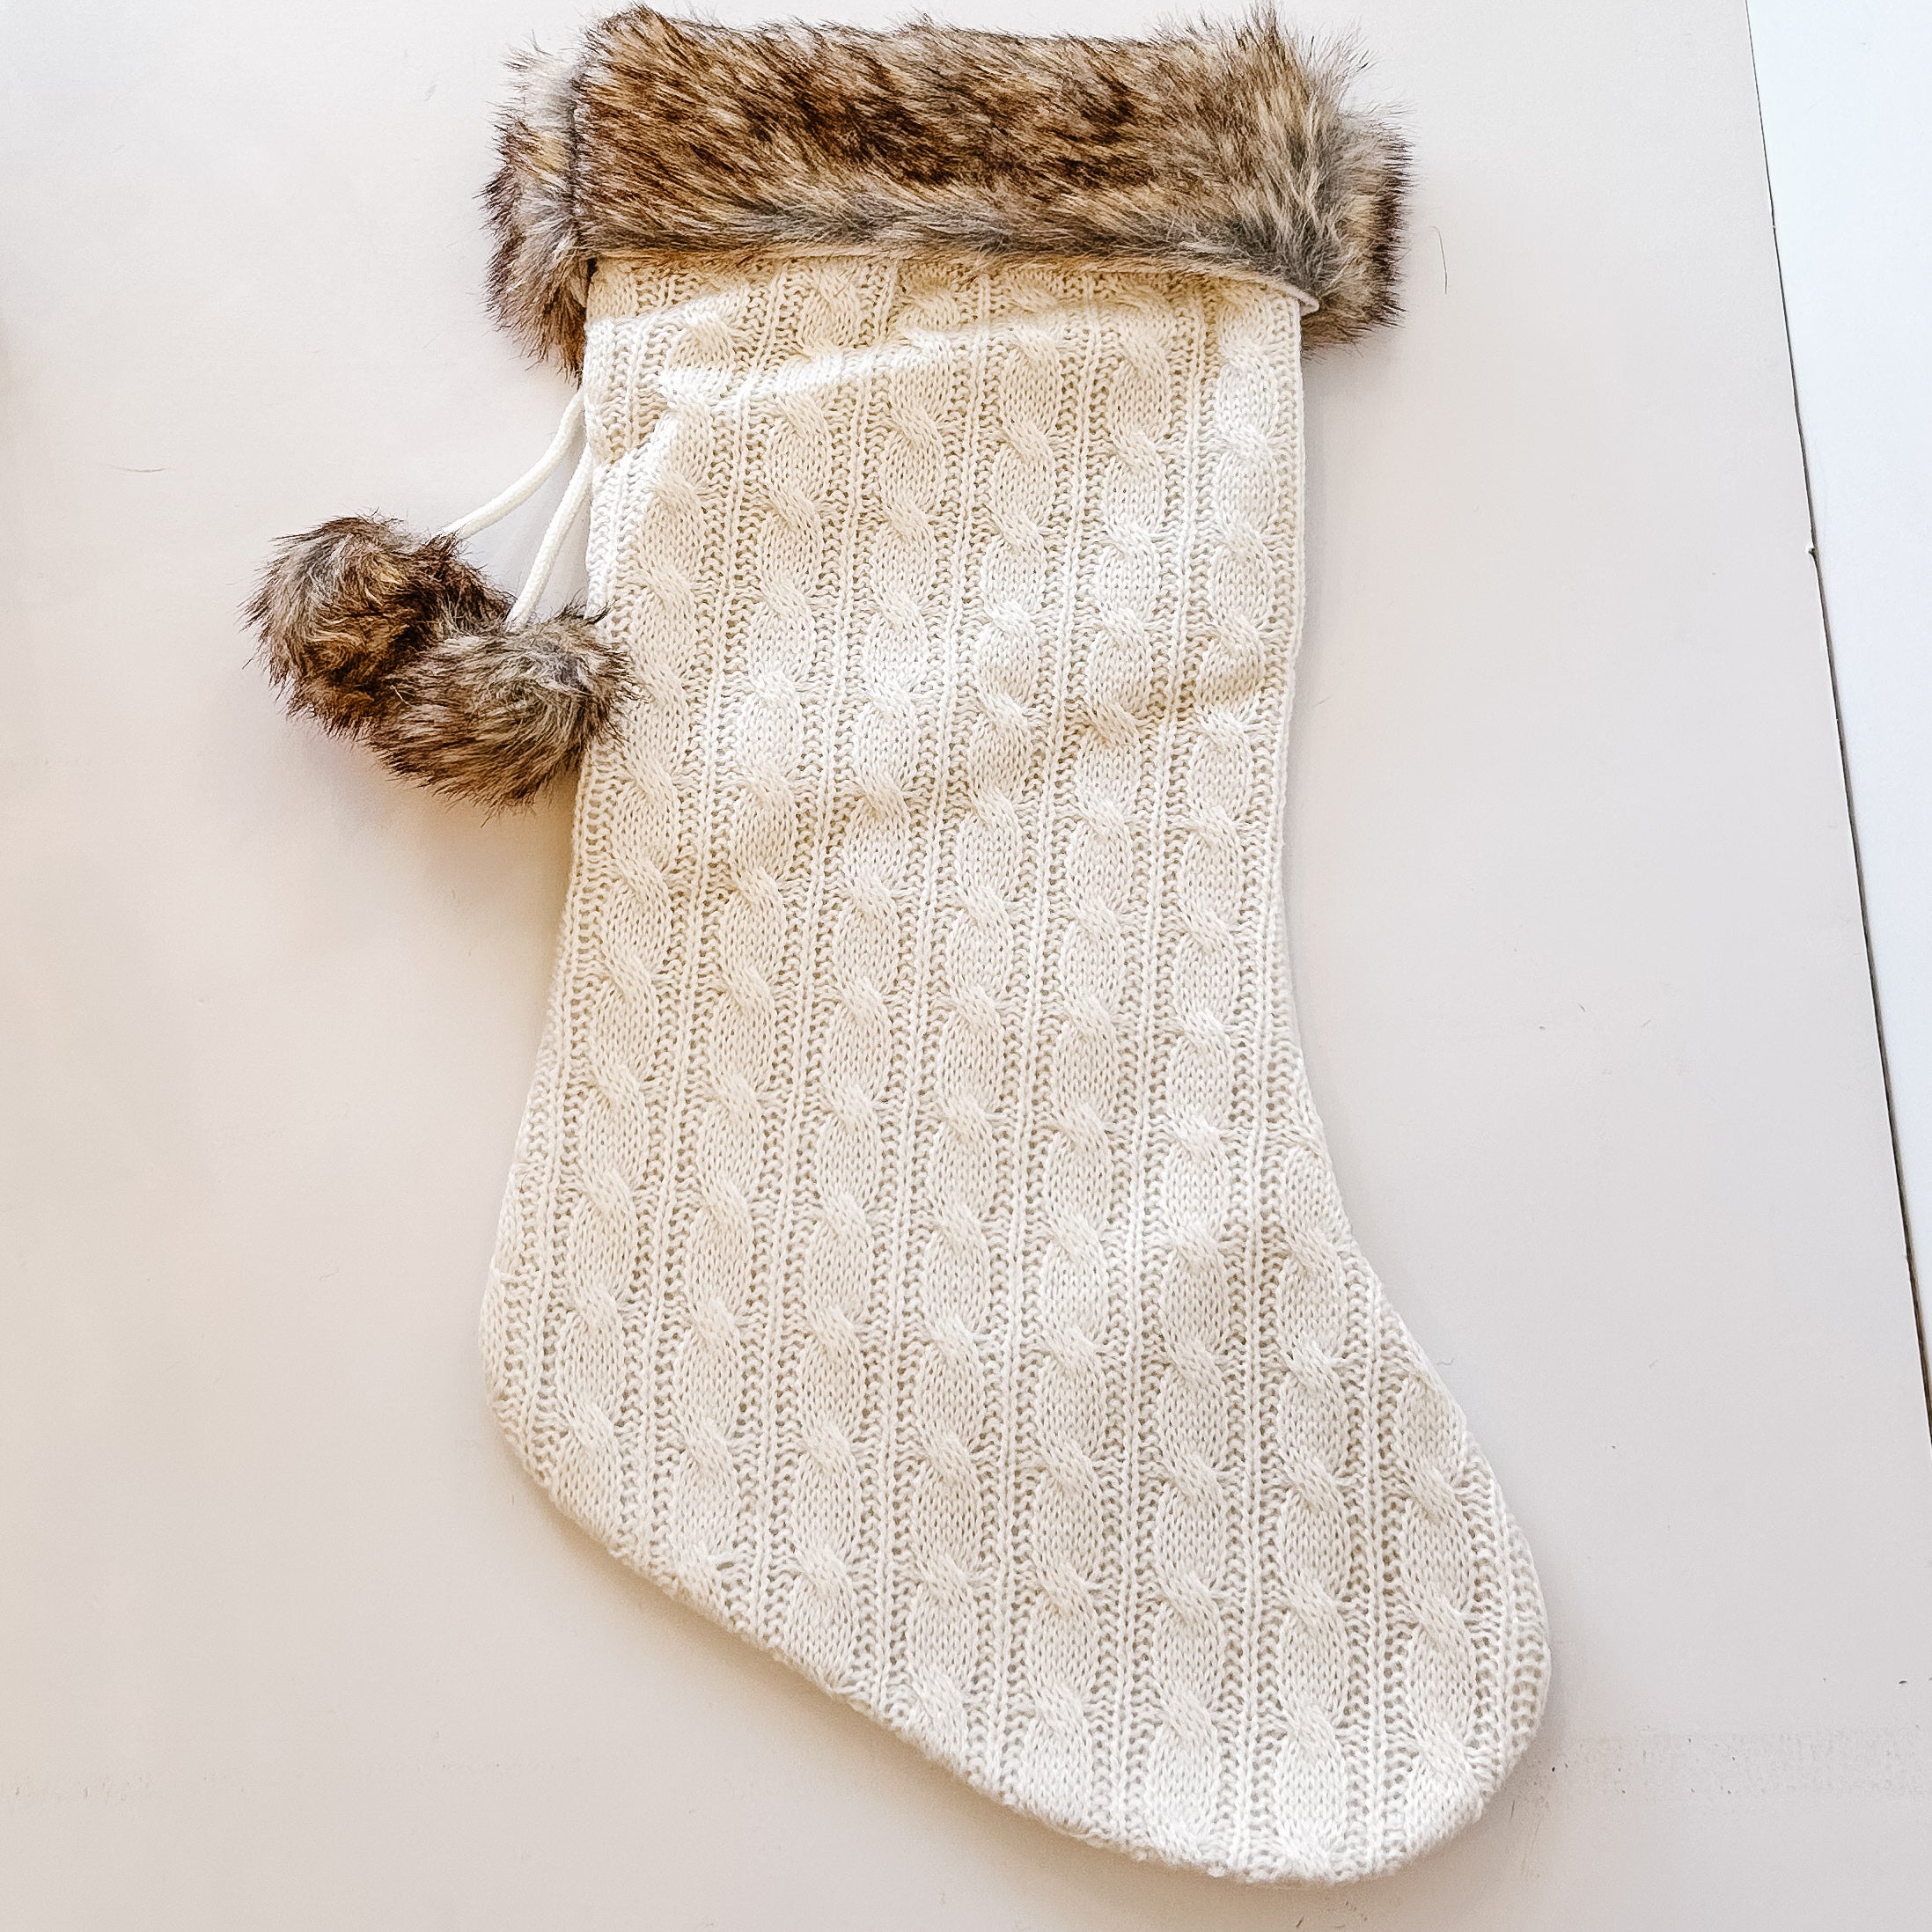 Knit Stocking with Faux Fur Trim